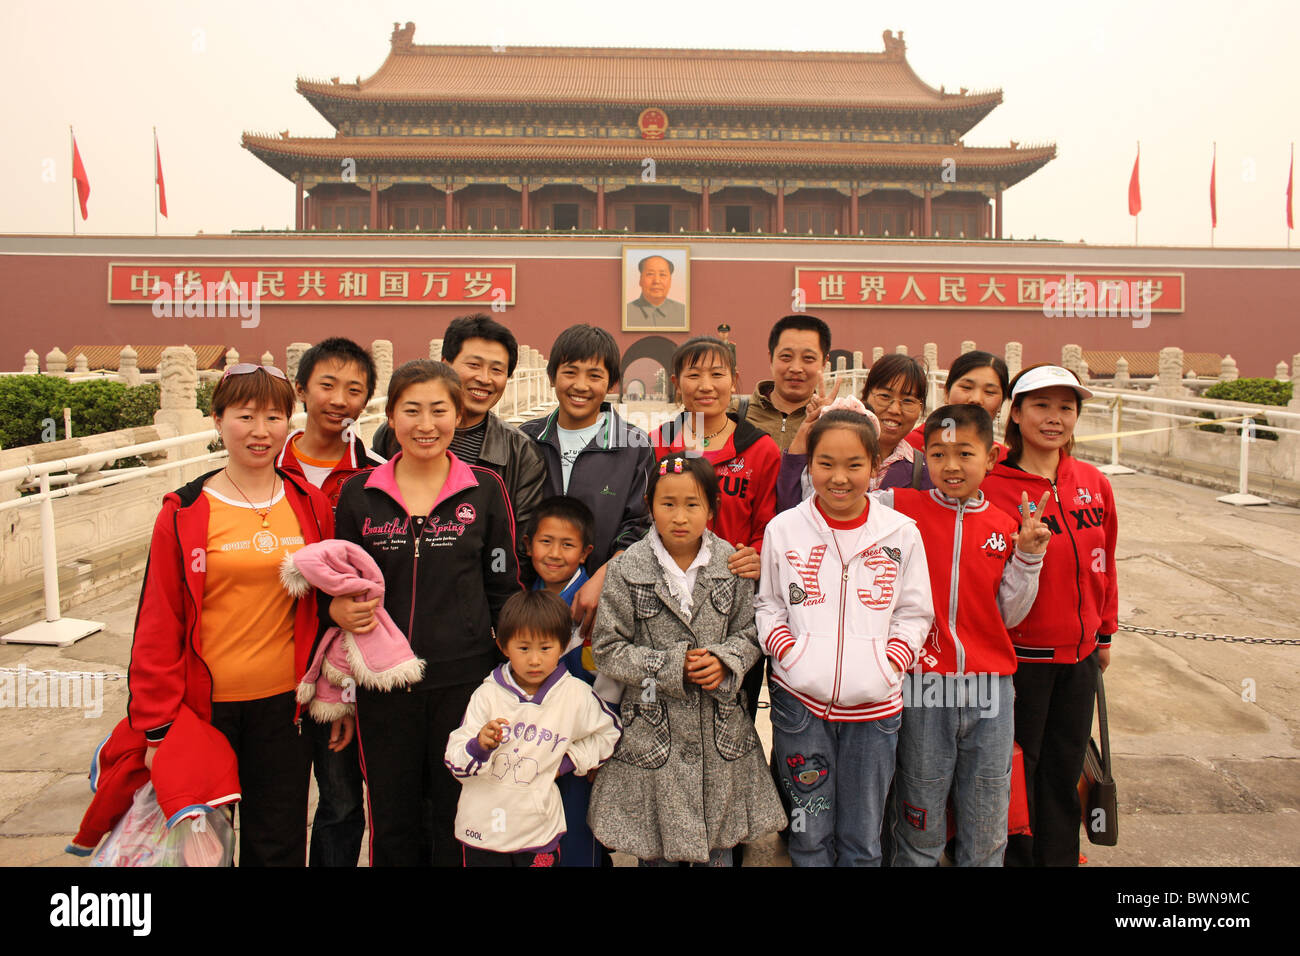 China Asien Peking Beijing Beijing Tiananmen April 2008 Tiananmen-Tor Partei Gruppe chinesischer Touristen Portra Stockfoto